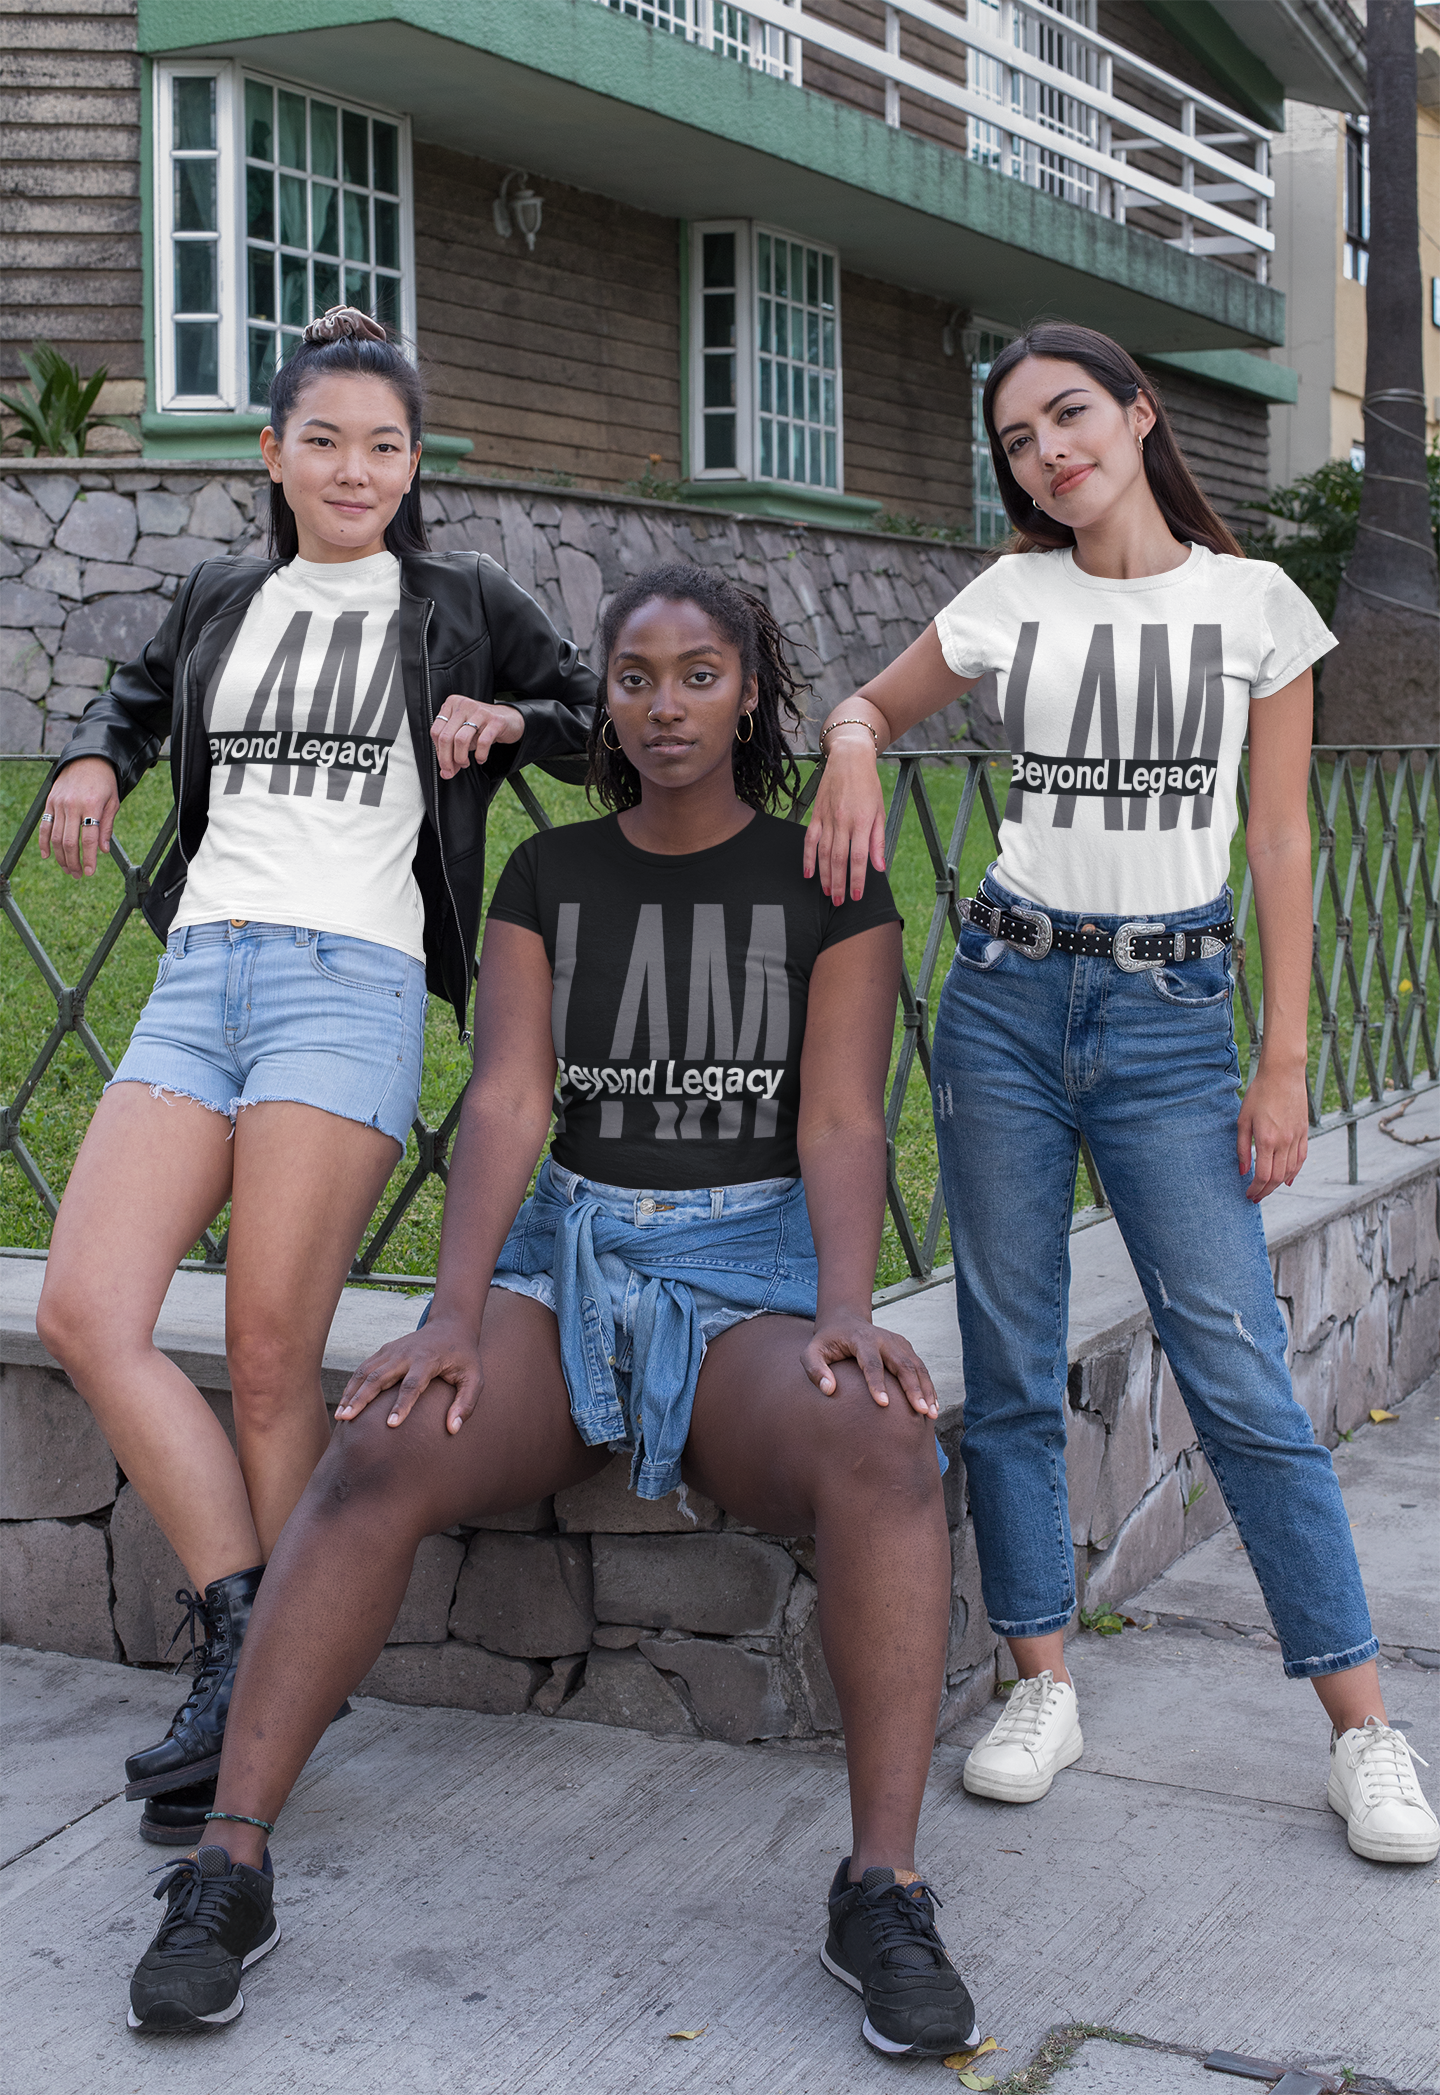 "I AM Beyond Legacy" - Unisex Crew & Ladies V-Neck T-Shirt